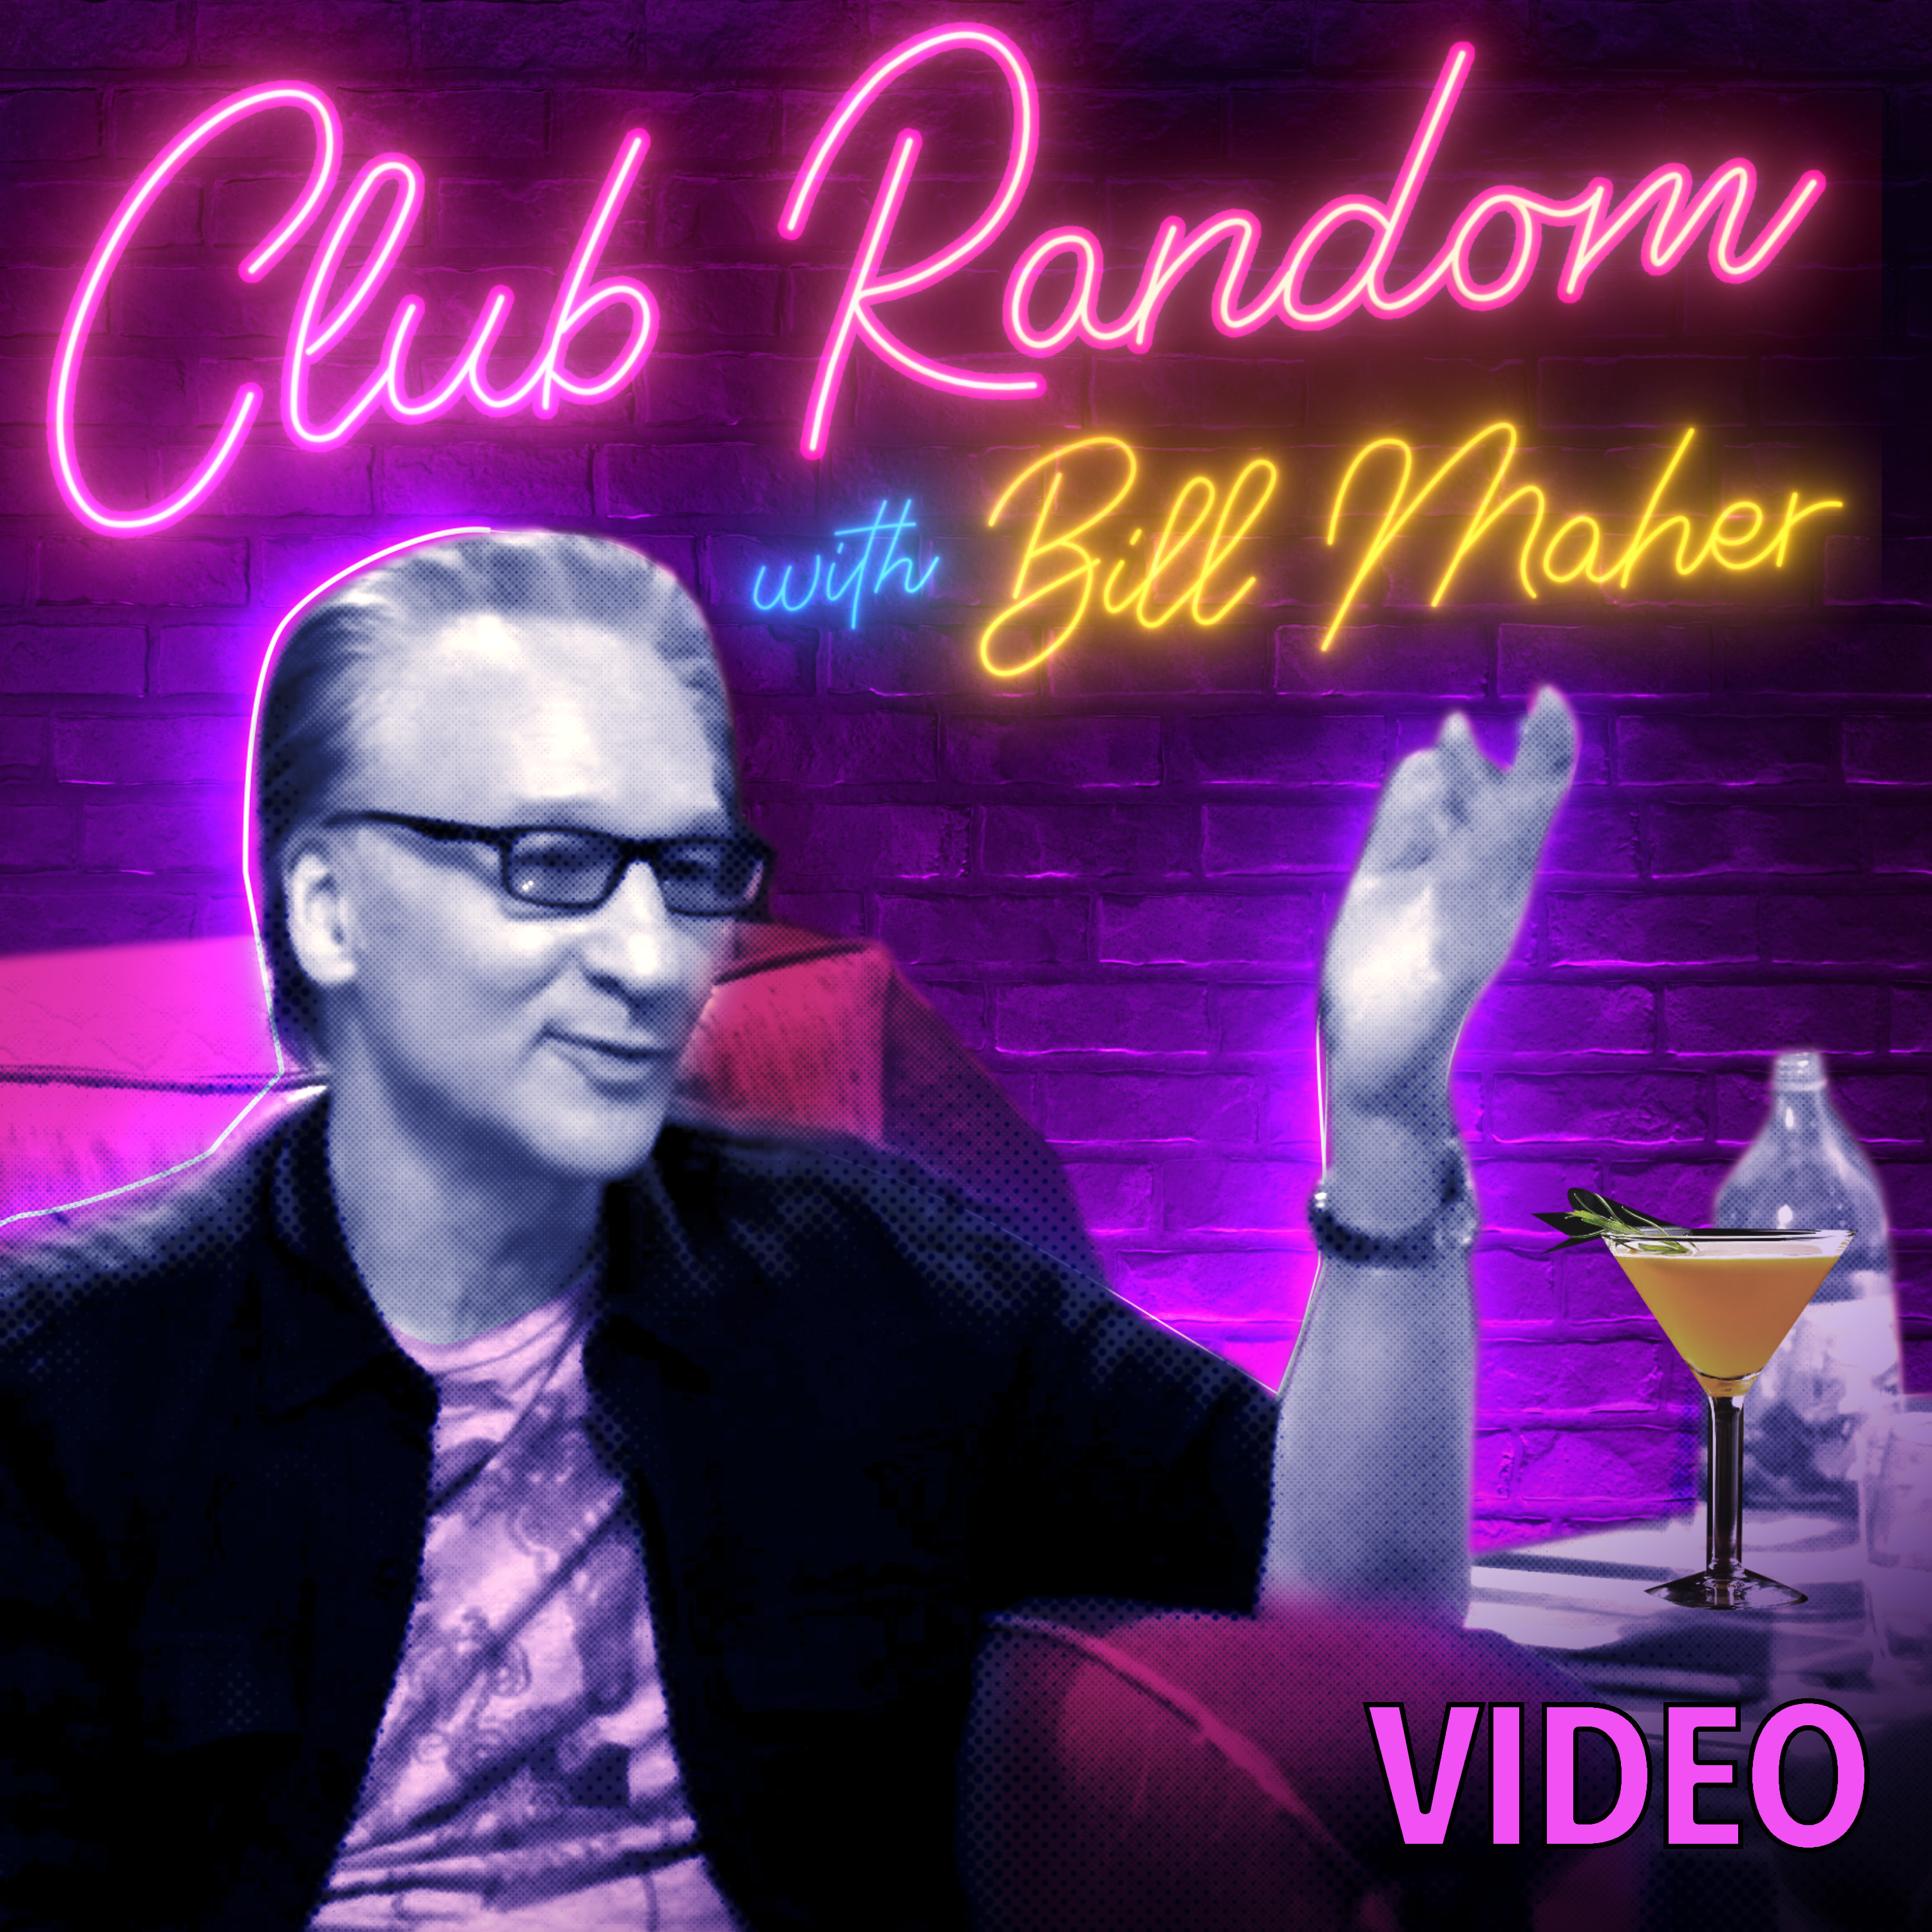 Video: James Brolin | Club Random with Bill Maher